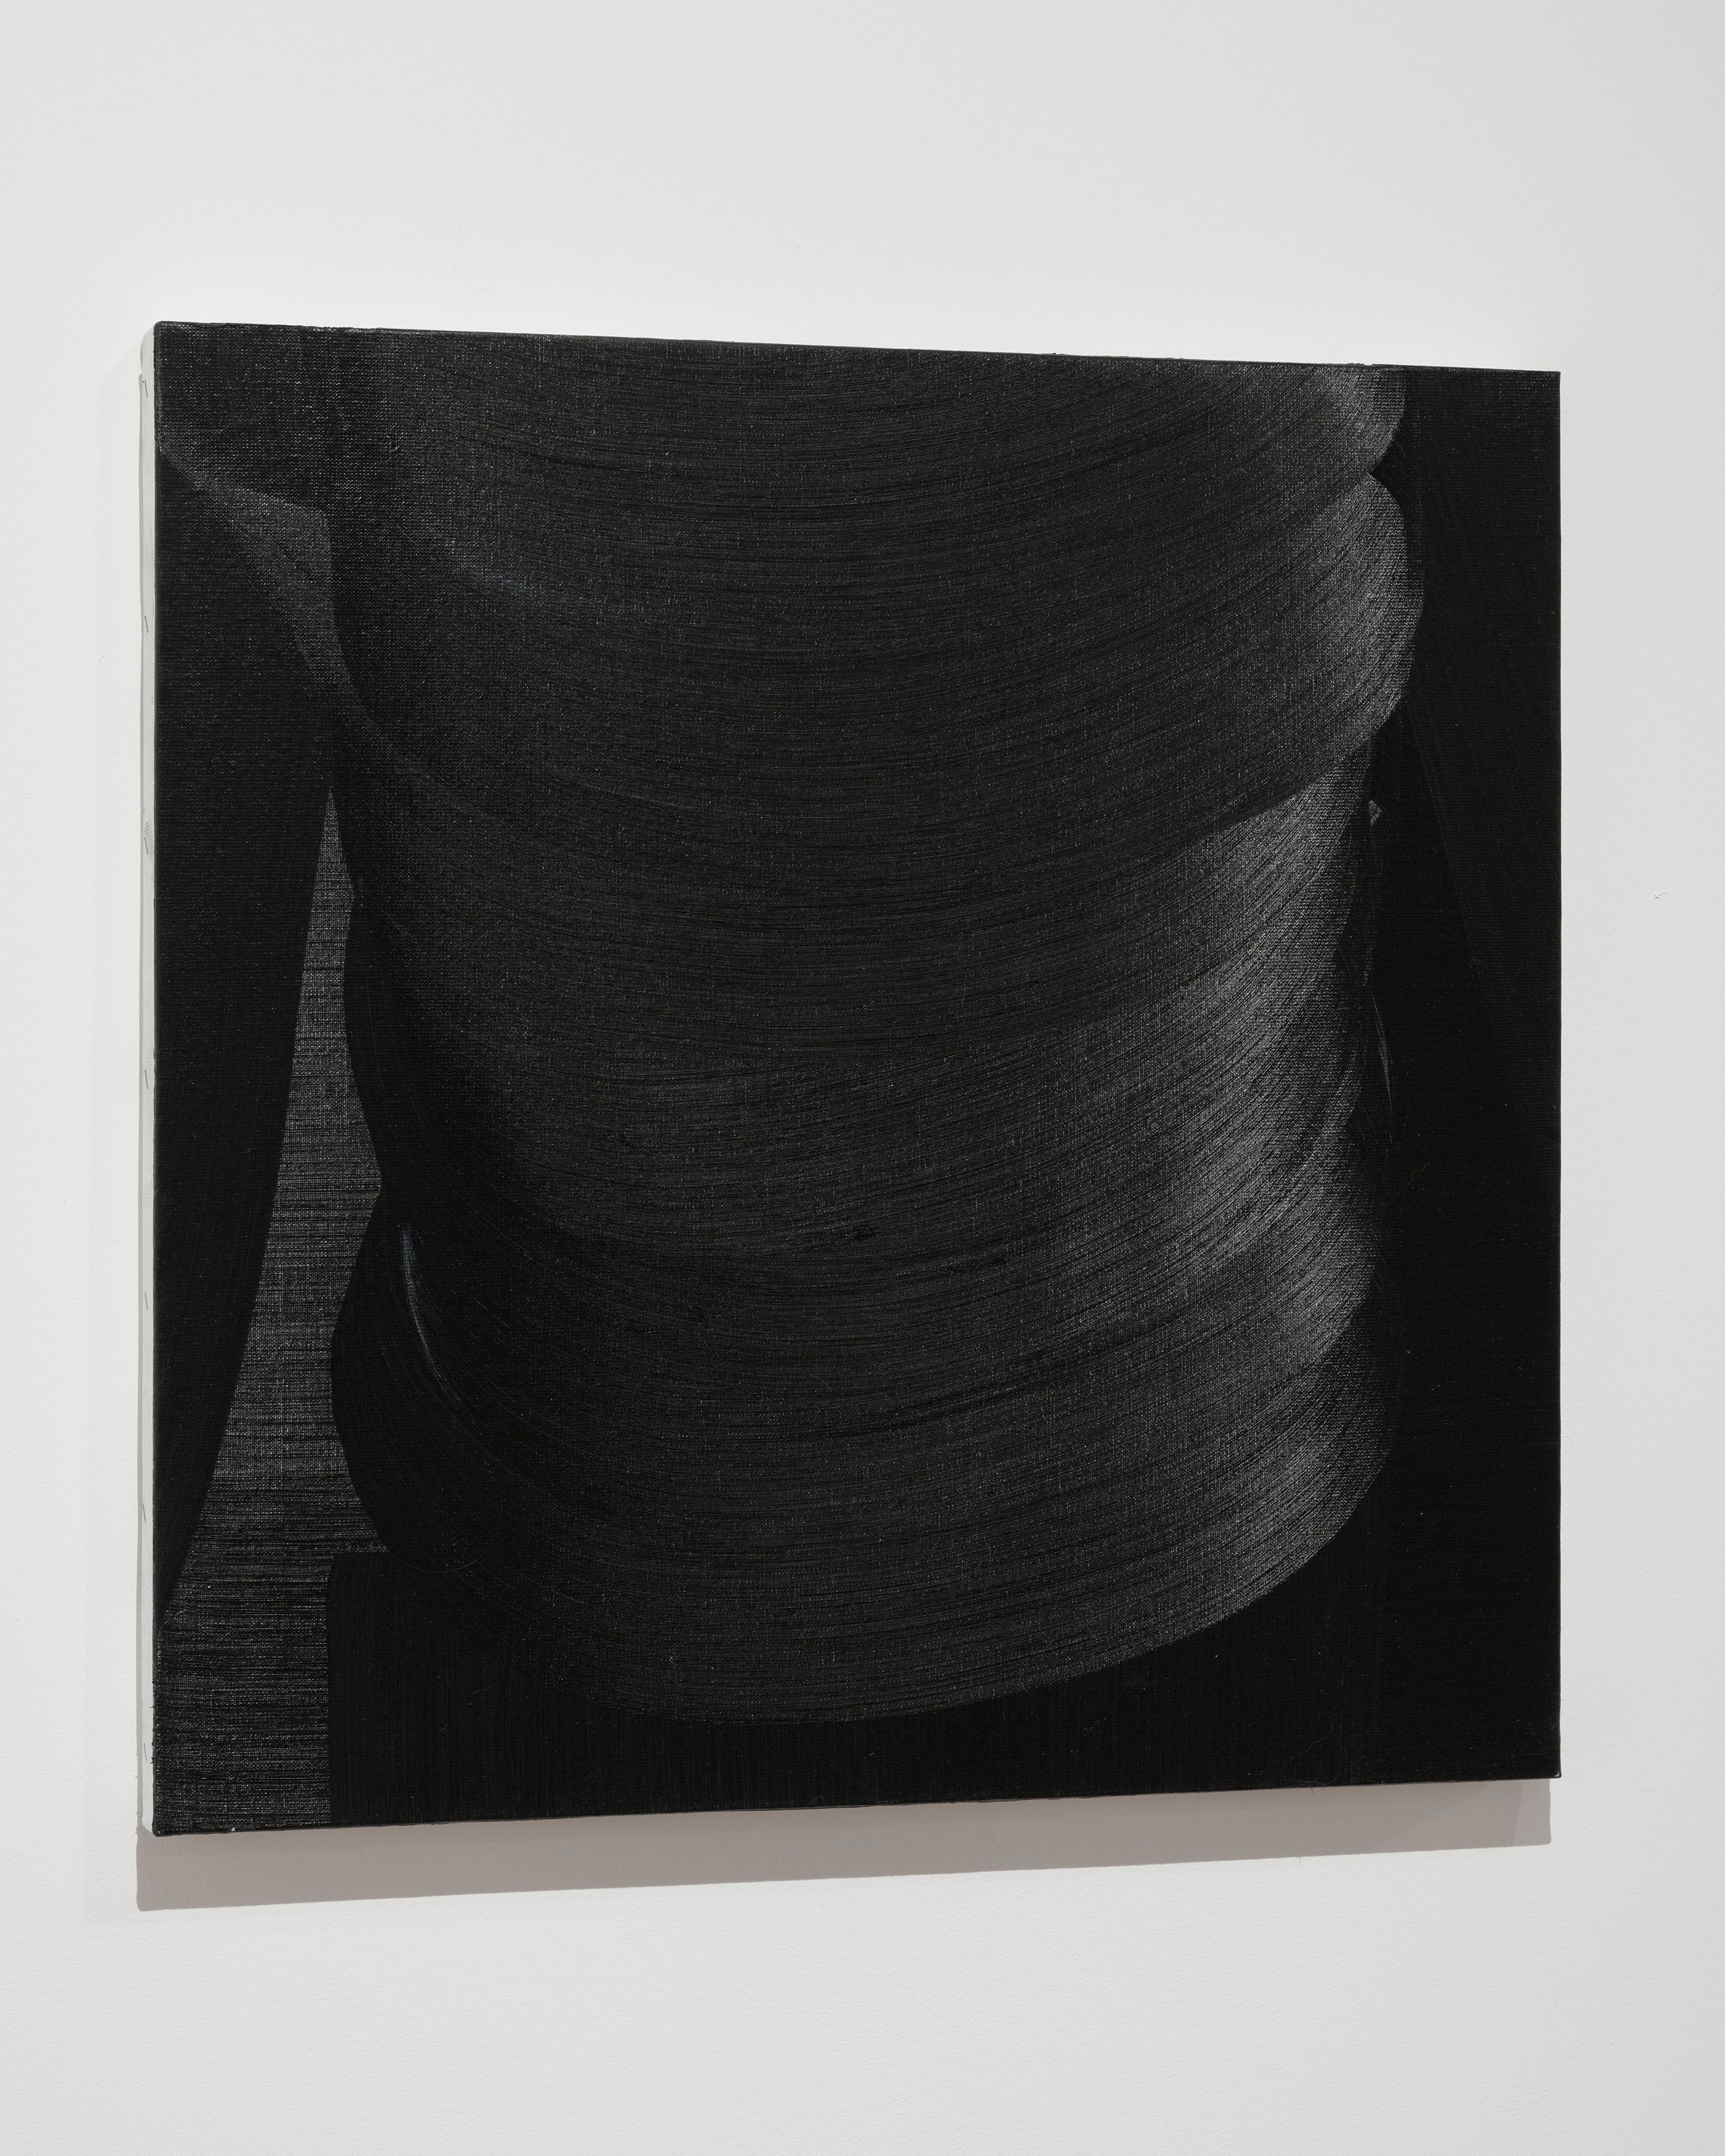 Rafal Bujnowski, Figure I, 2019, oil on canvas, 66 x 66 x 3 cm (26 x 26 x 1 1/8 in.)